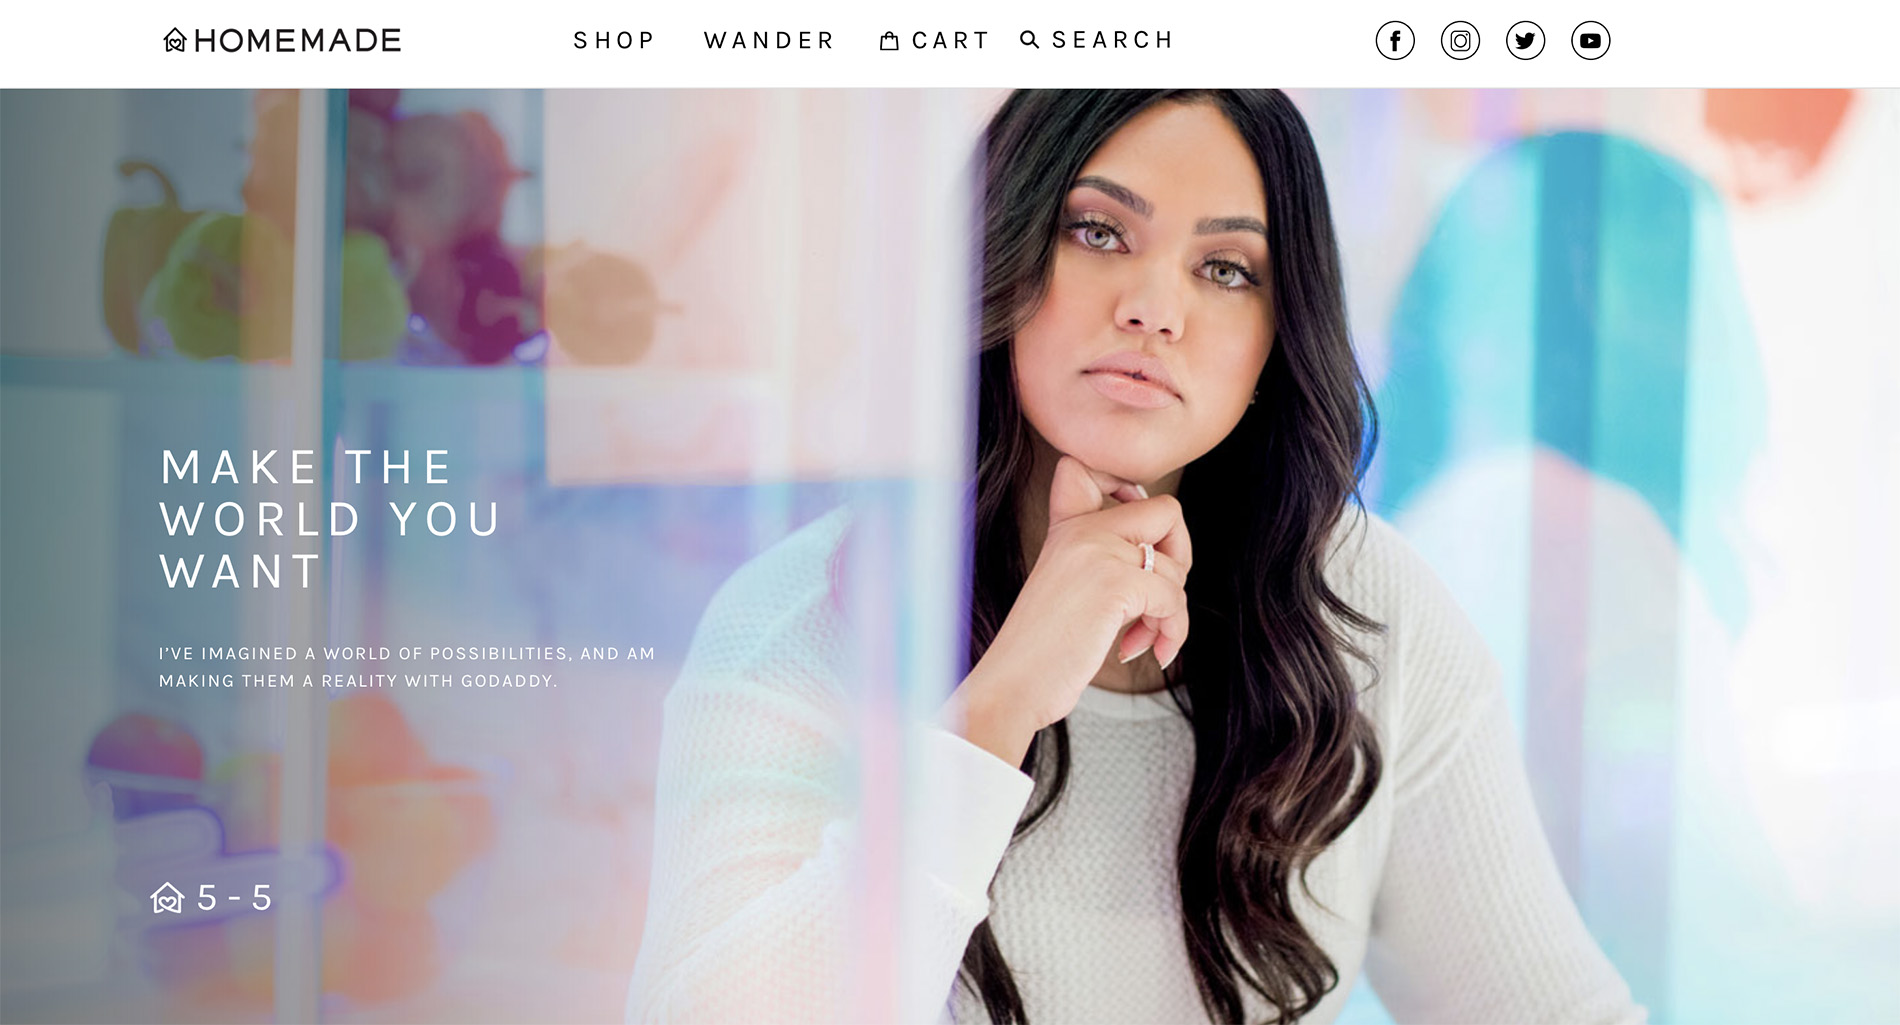 Ayesha Curry’s new ShopHomeMade.com website, powered by GoDaddy